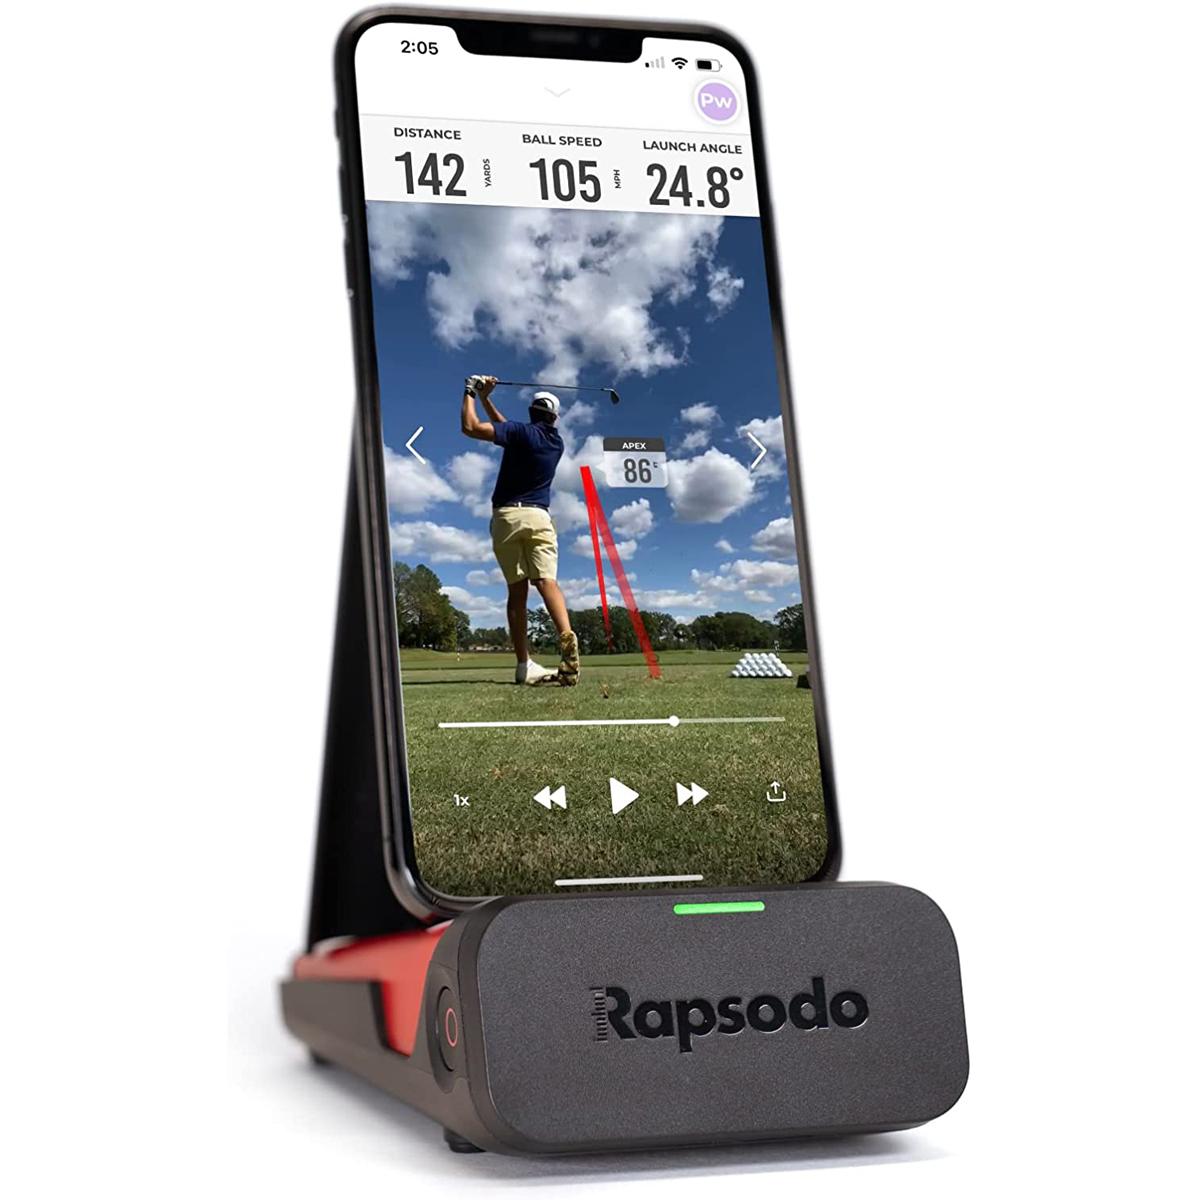 Rapsodo Mobile Launch Monitor for $299.99 Shipped